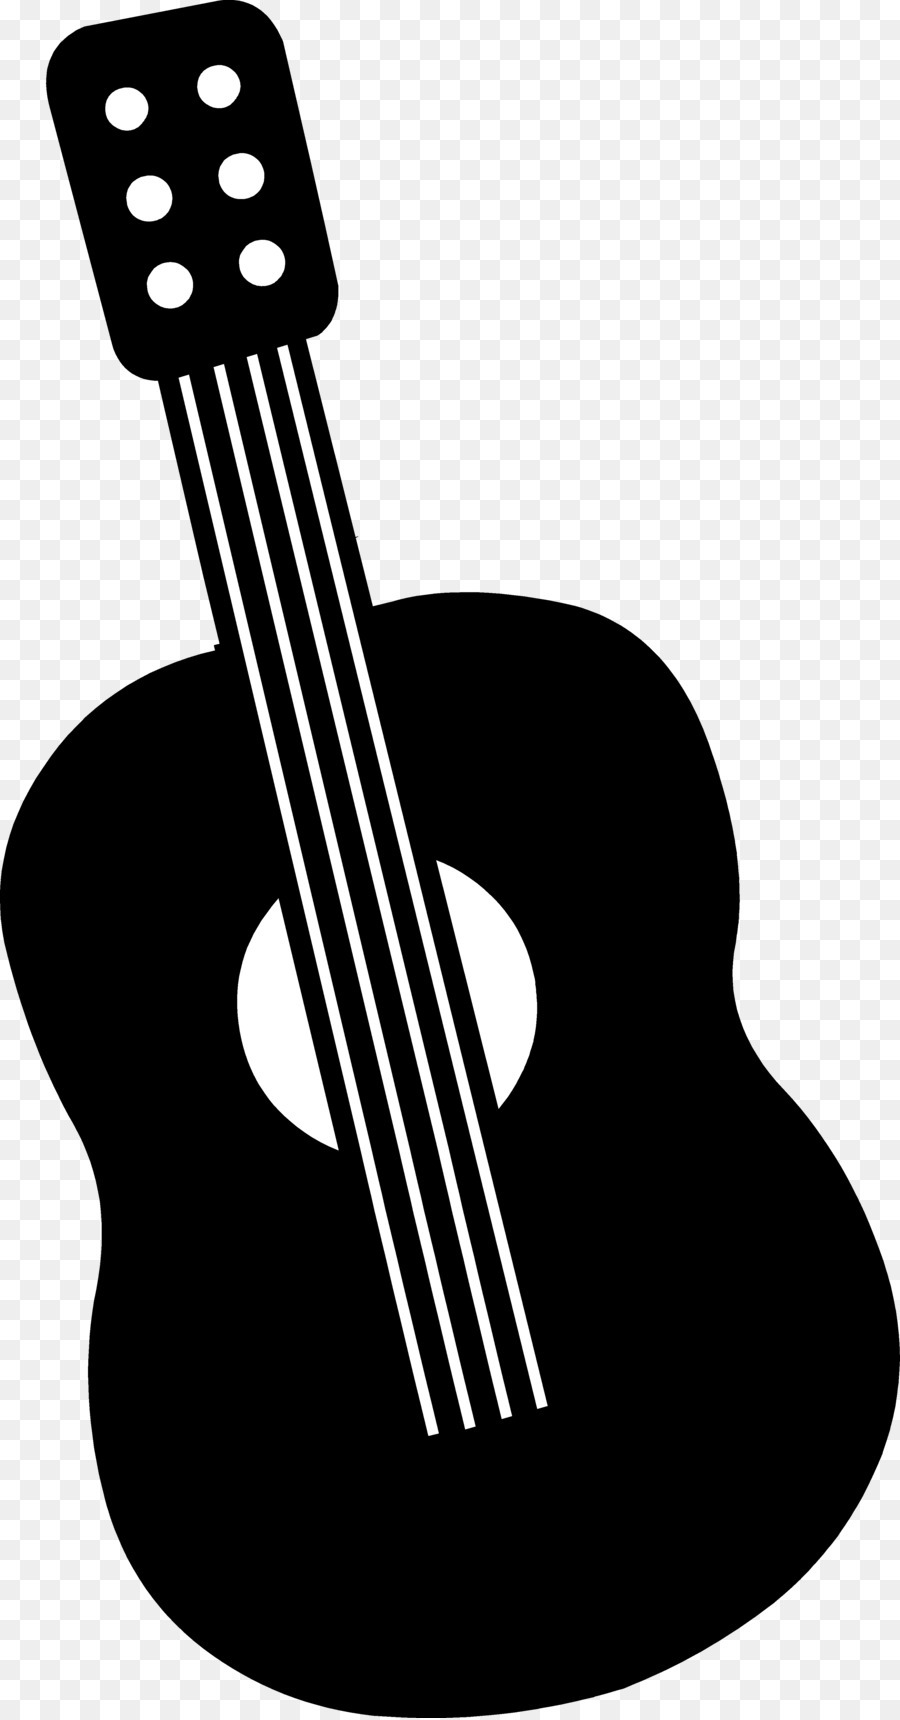 Acoustic guitar Silhouette Clip art - Guitar Black Cliparts png download - 3487*6655 - Free Transparent Guitar png Download.